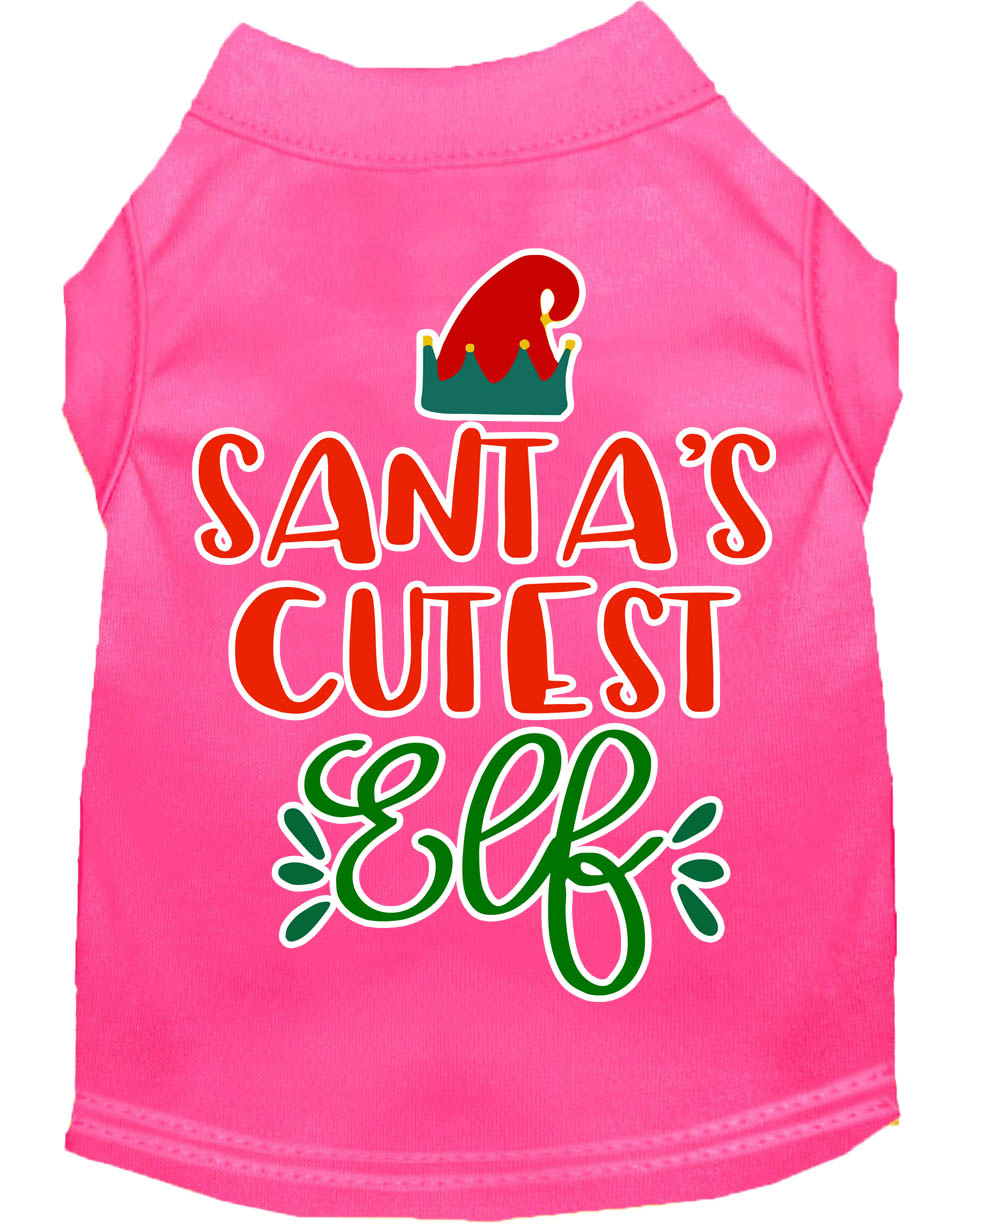 Santa's Cutest Elf Screen Print Dog Shirt Bright Pink XL